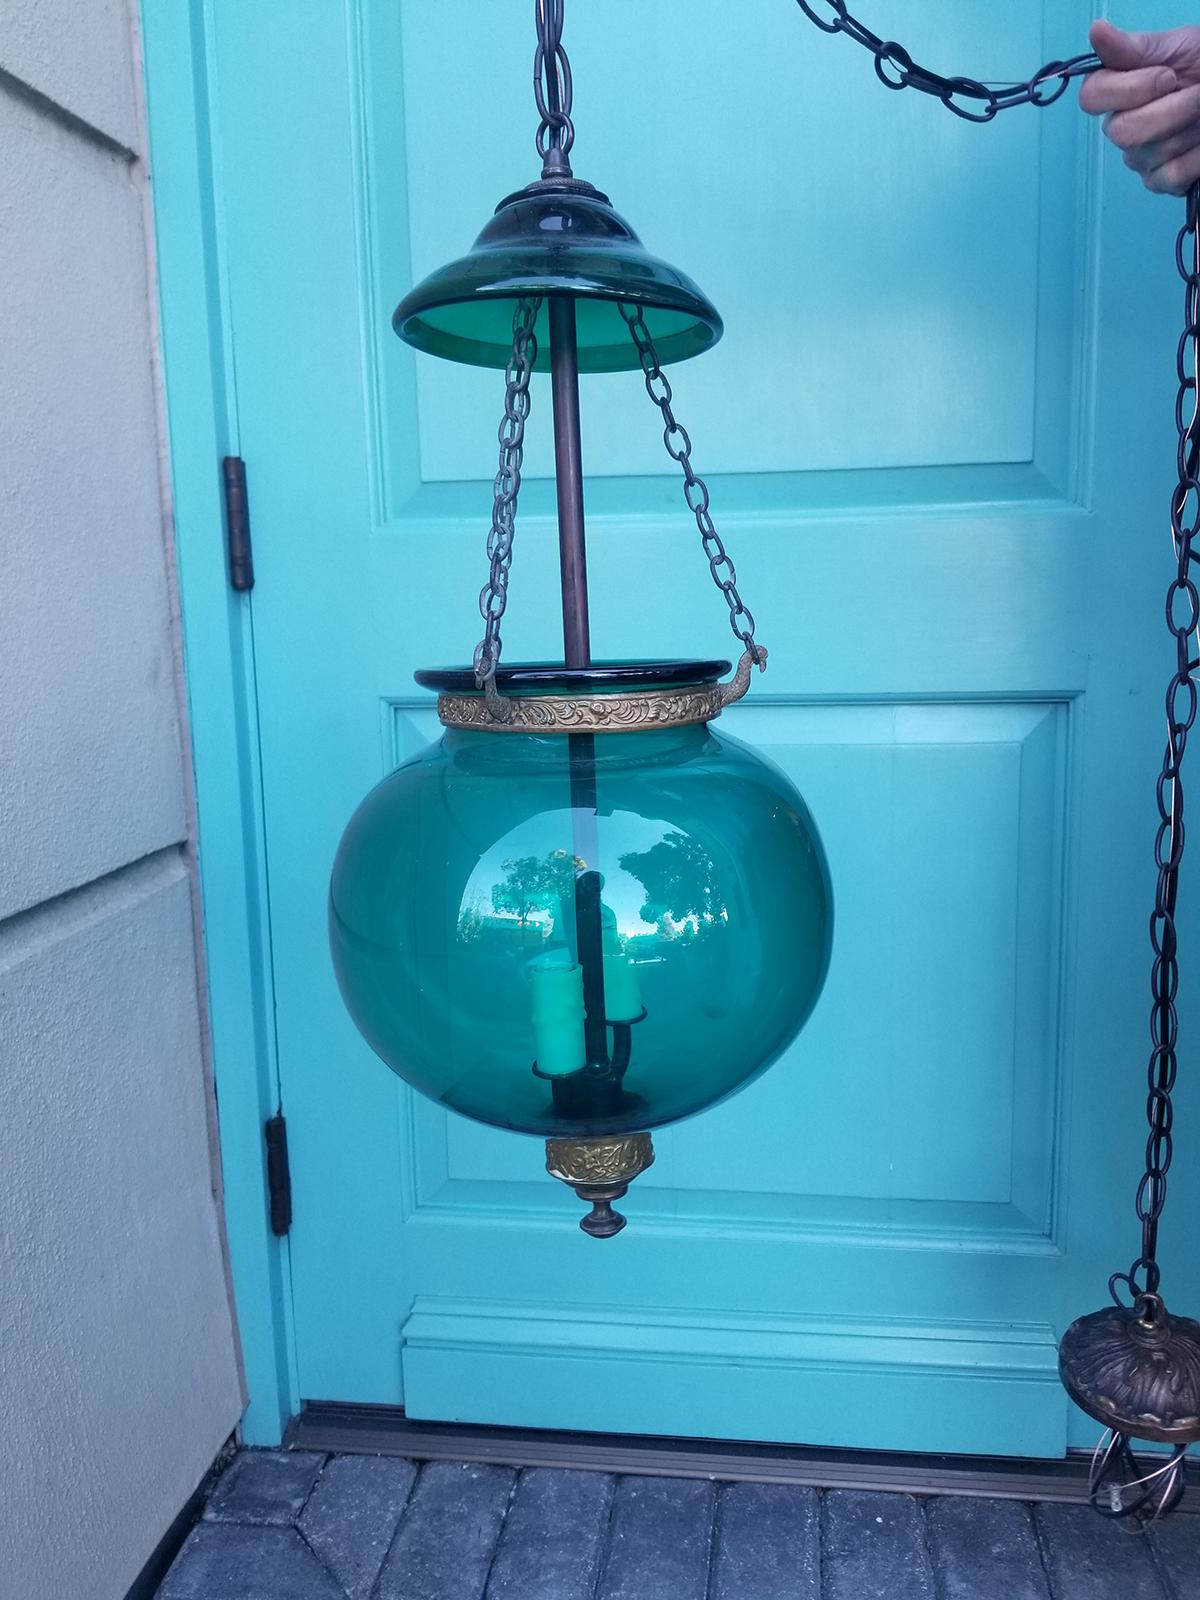 19th century English green glass bell jar lantern with smoke bell, handblown.